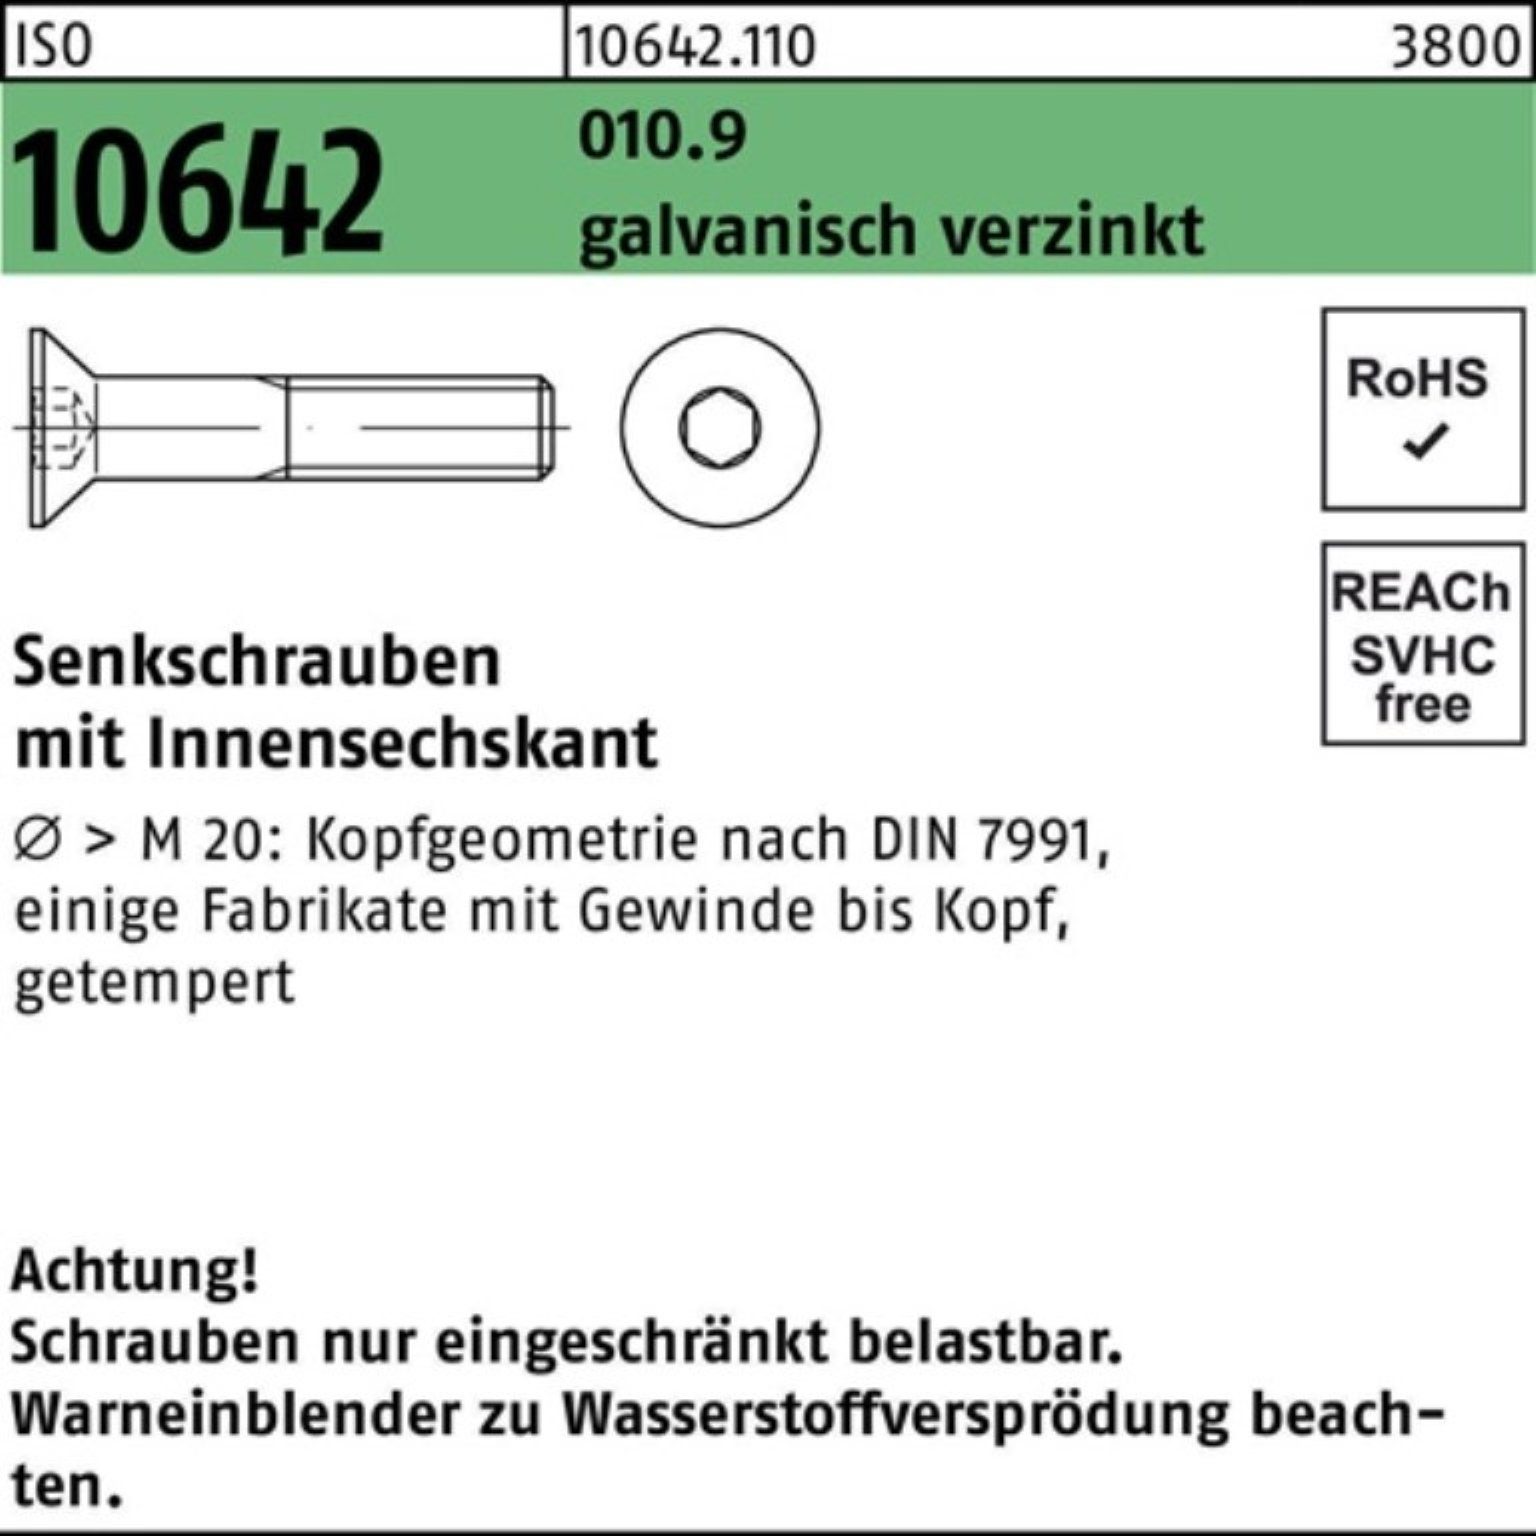 Reyher Senkschraube 200er 16 Innen-6kt galv.verz. 2 10642 M10x Pack 010.9 Senkschraube ISO